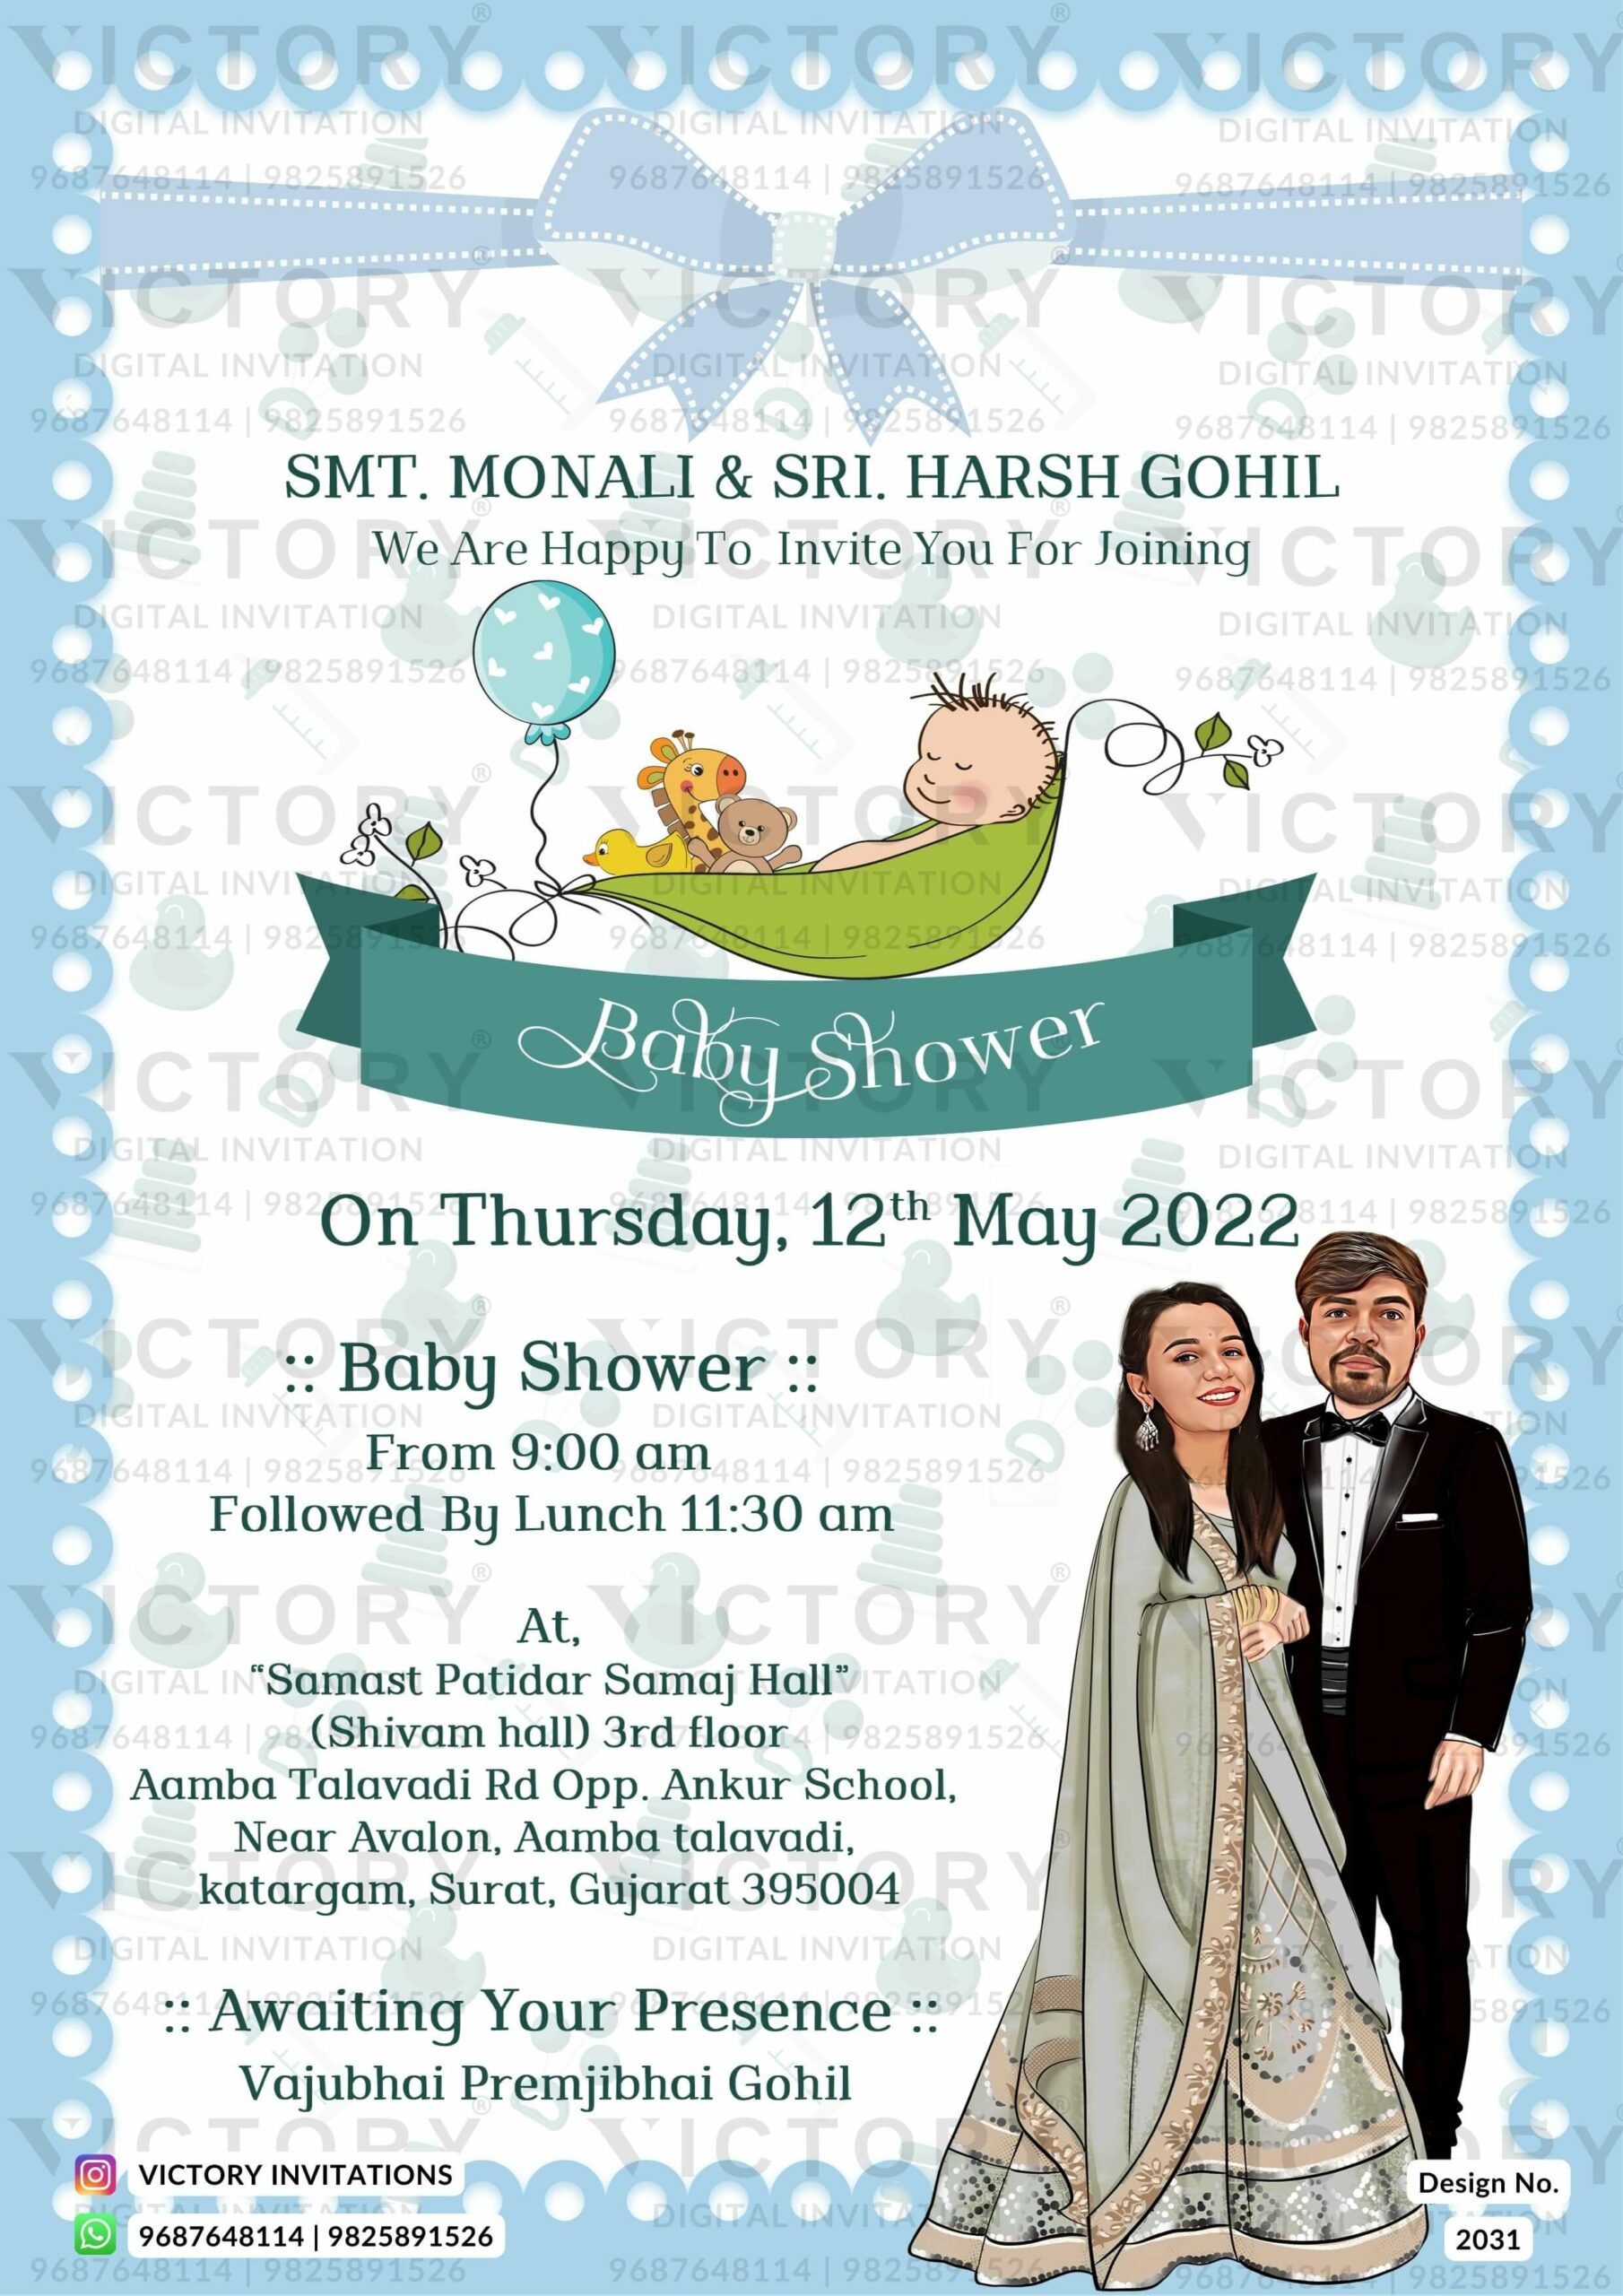 Baby Shower digital invitation card in english design no.2031